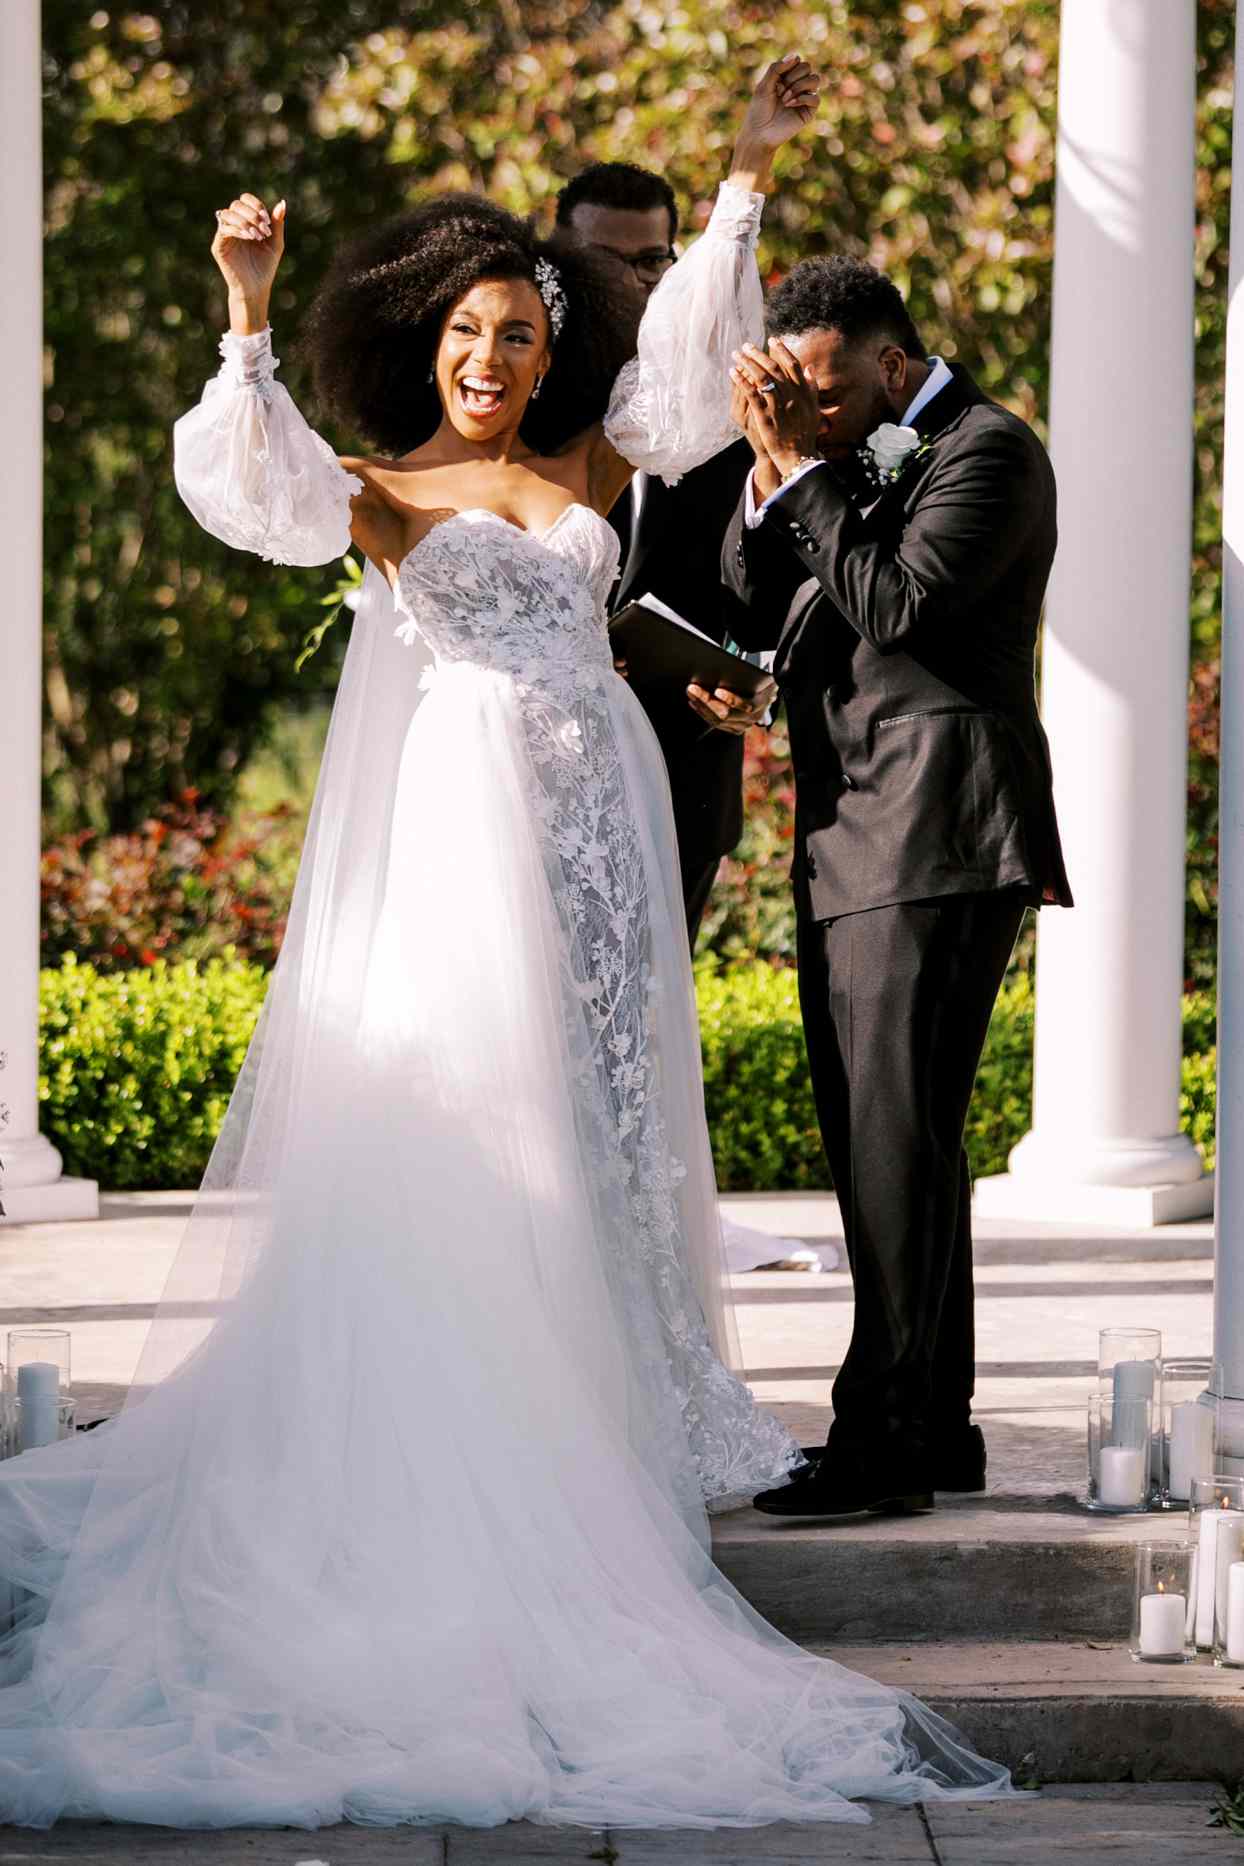 bride and groom celebrate during wedding ceremony